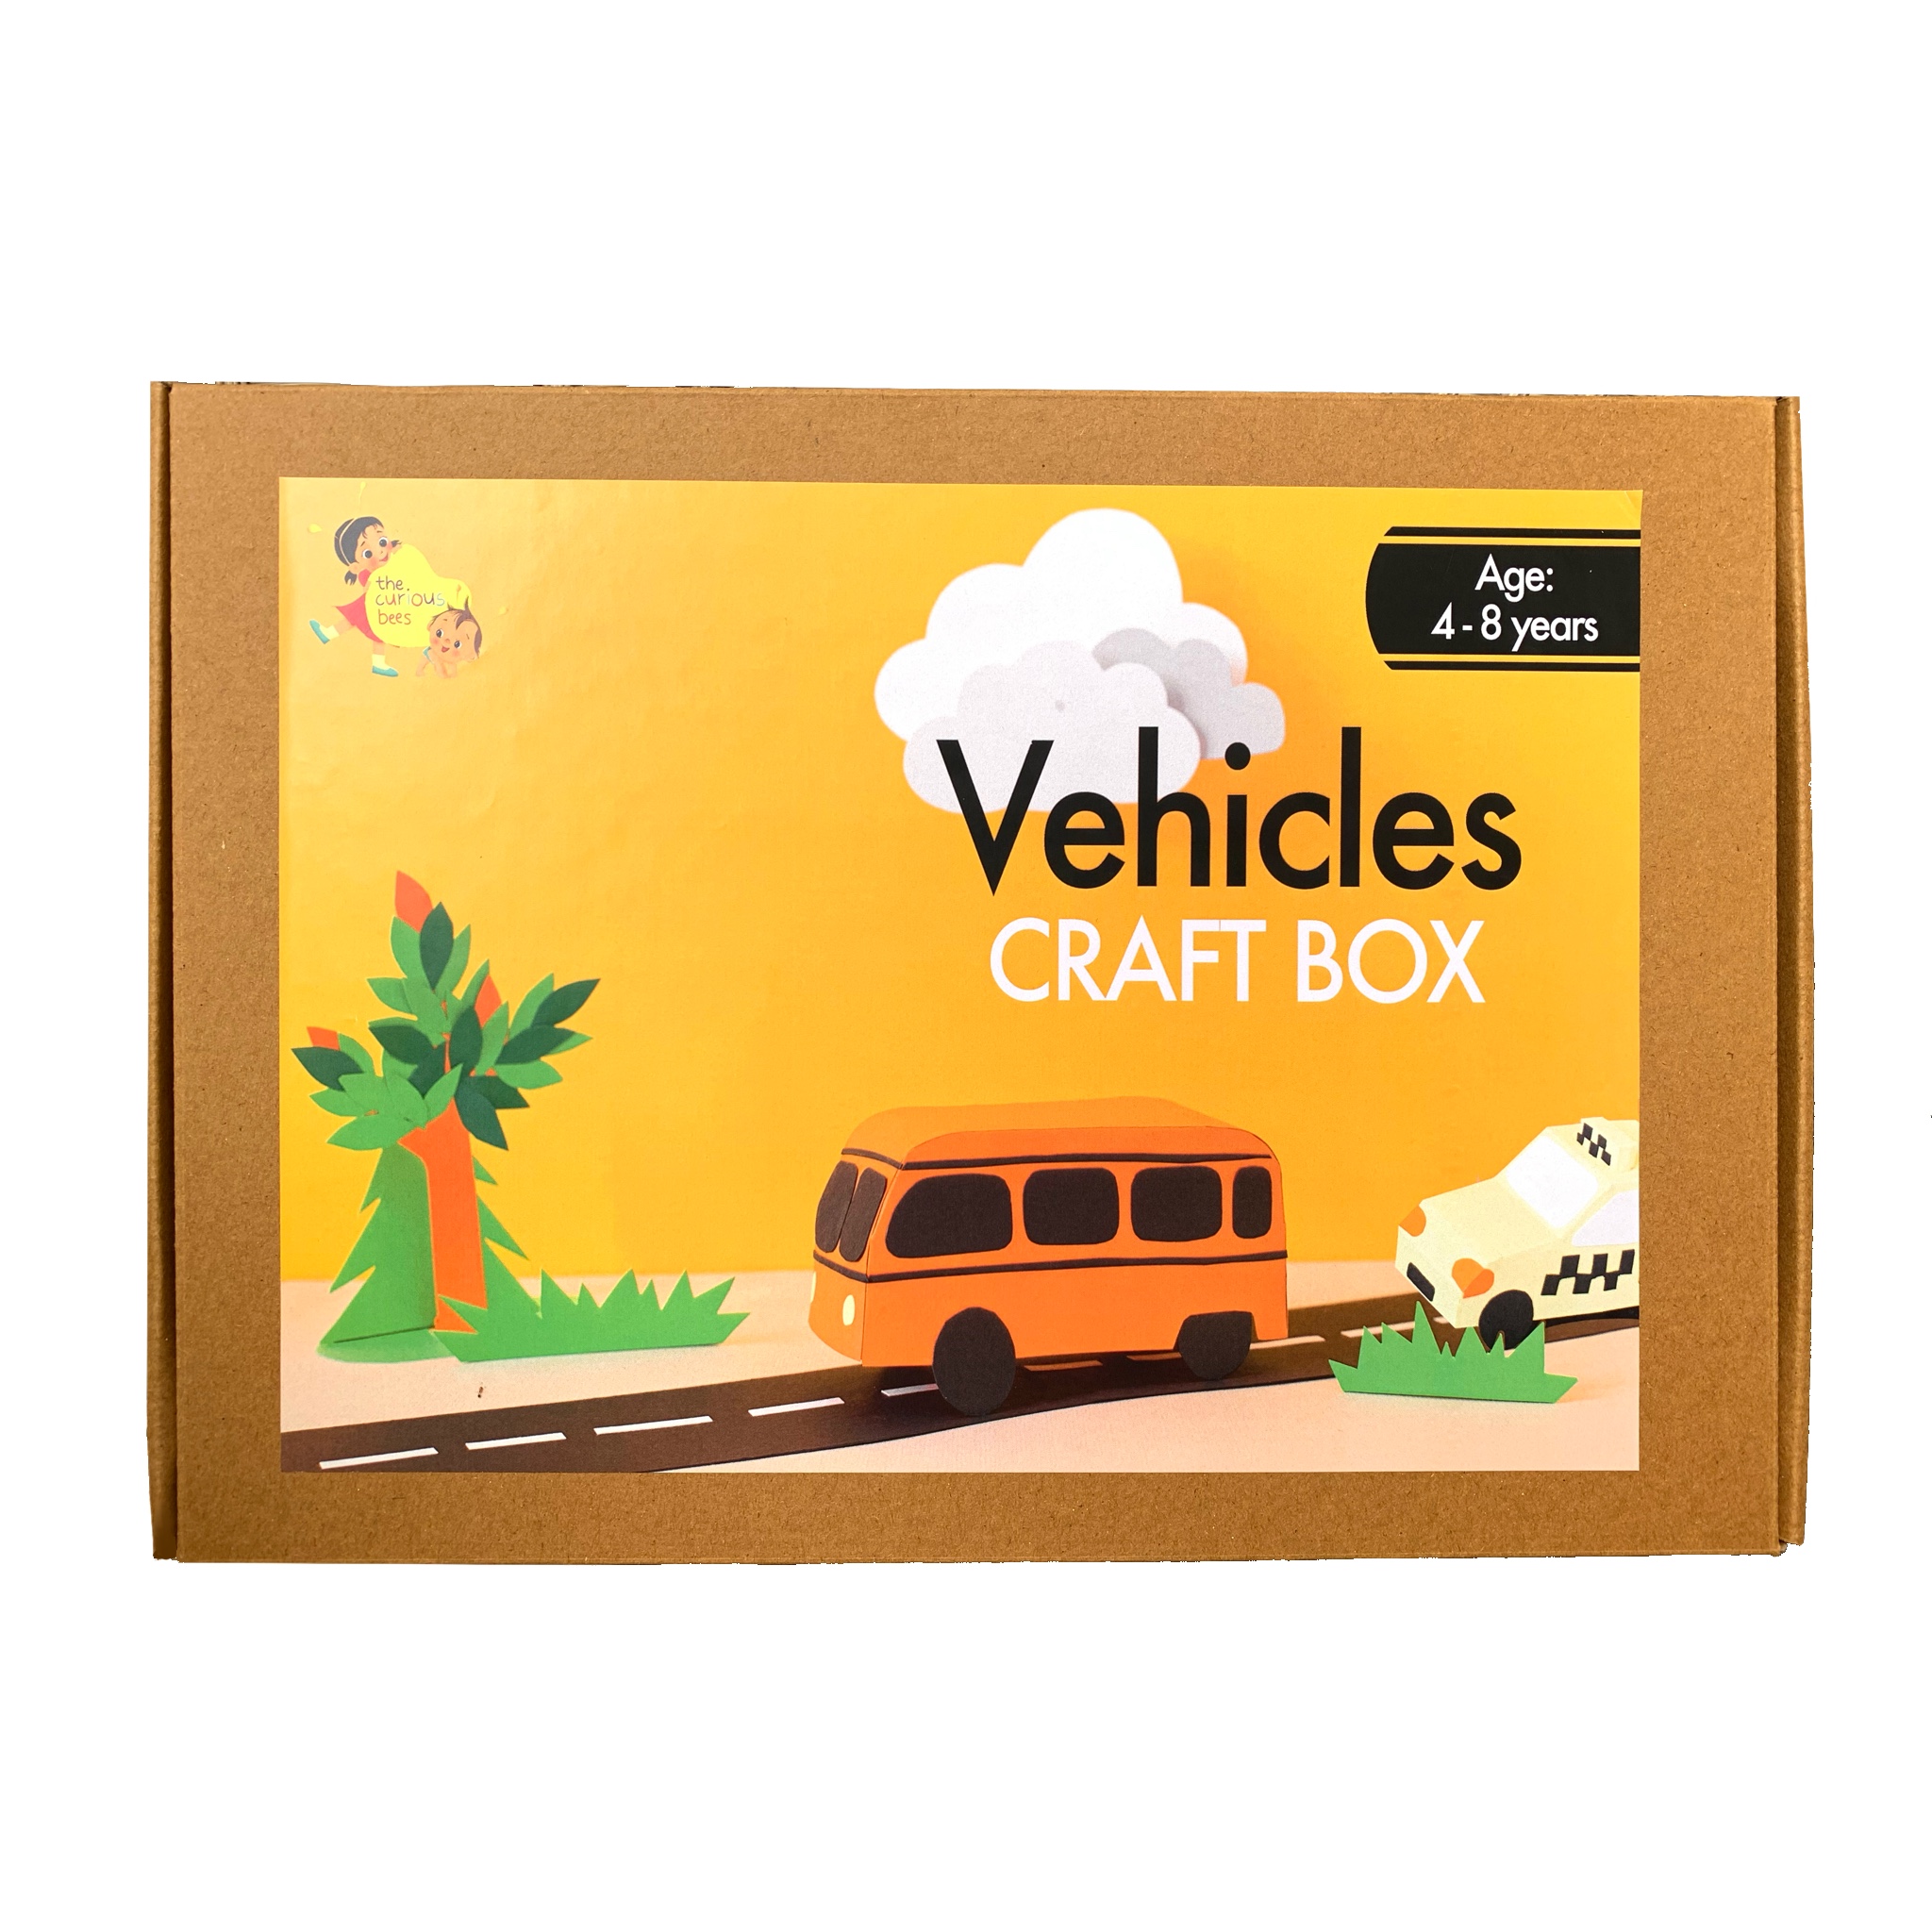 Vehicles Craft Box